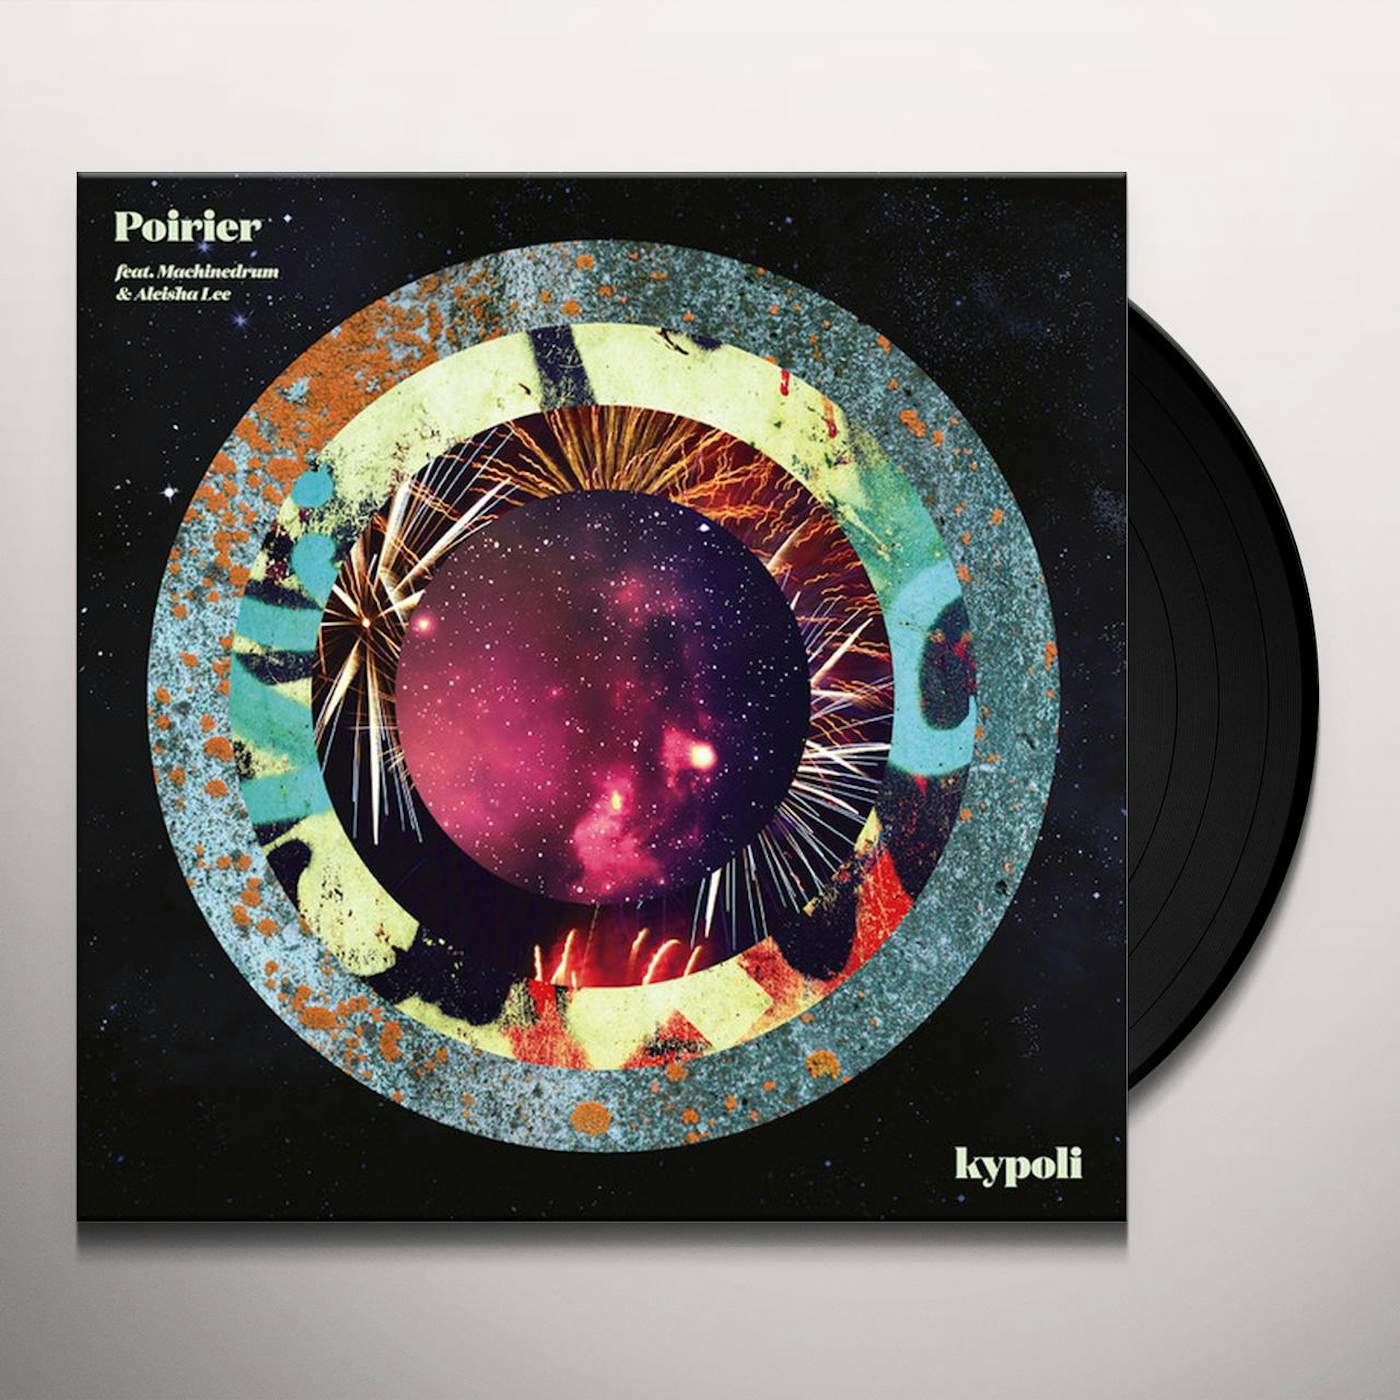 Poirier Kypoli Vinyl Record